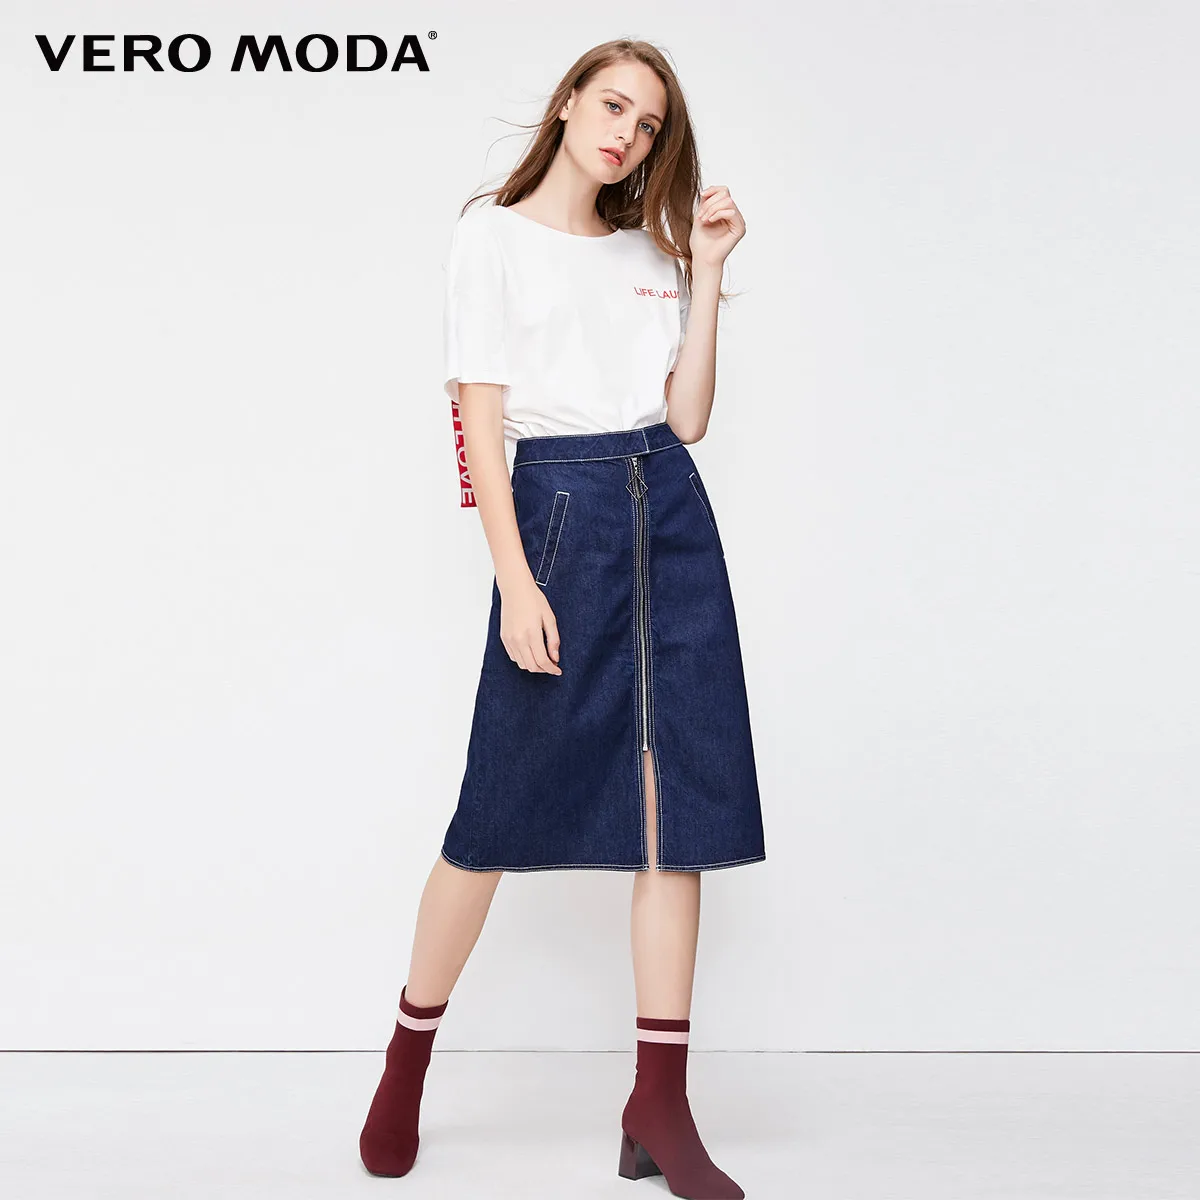 Vero Moda New Women's Decorative Zip A-lined Denim Skirt | 318337519 - Цвет: Indigo blue denim